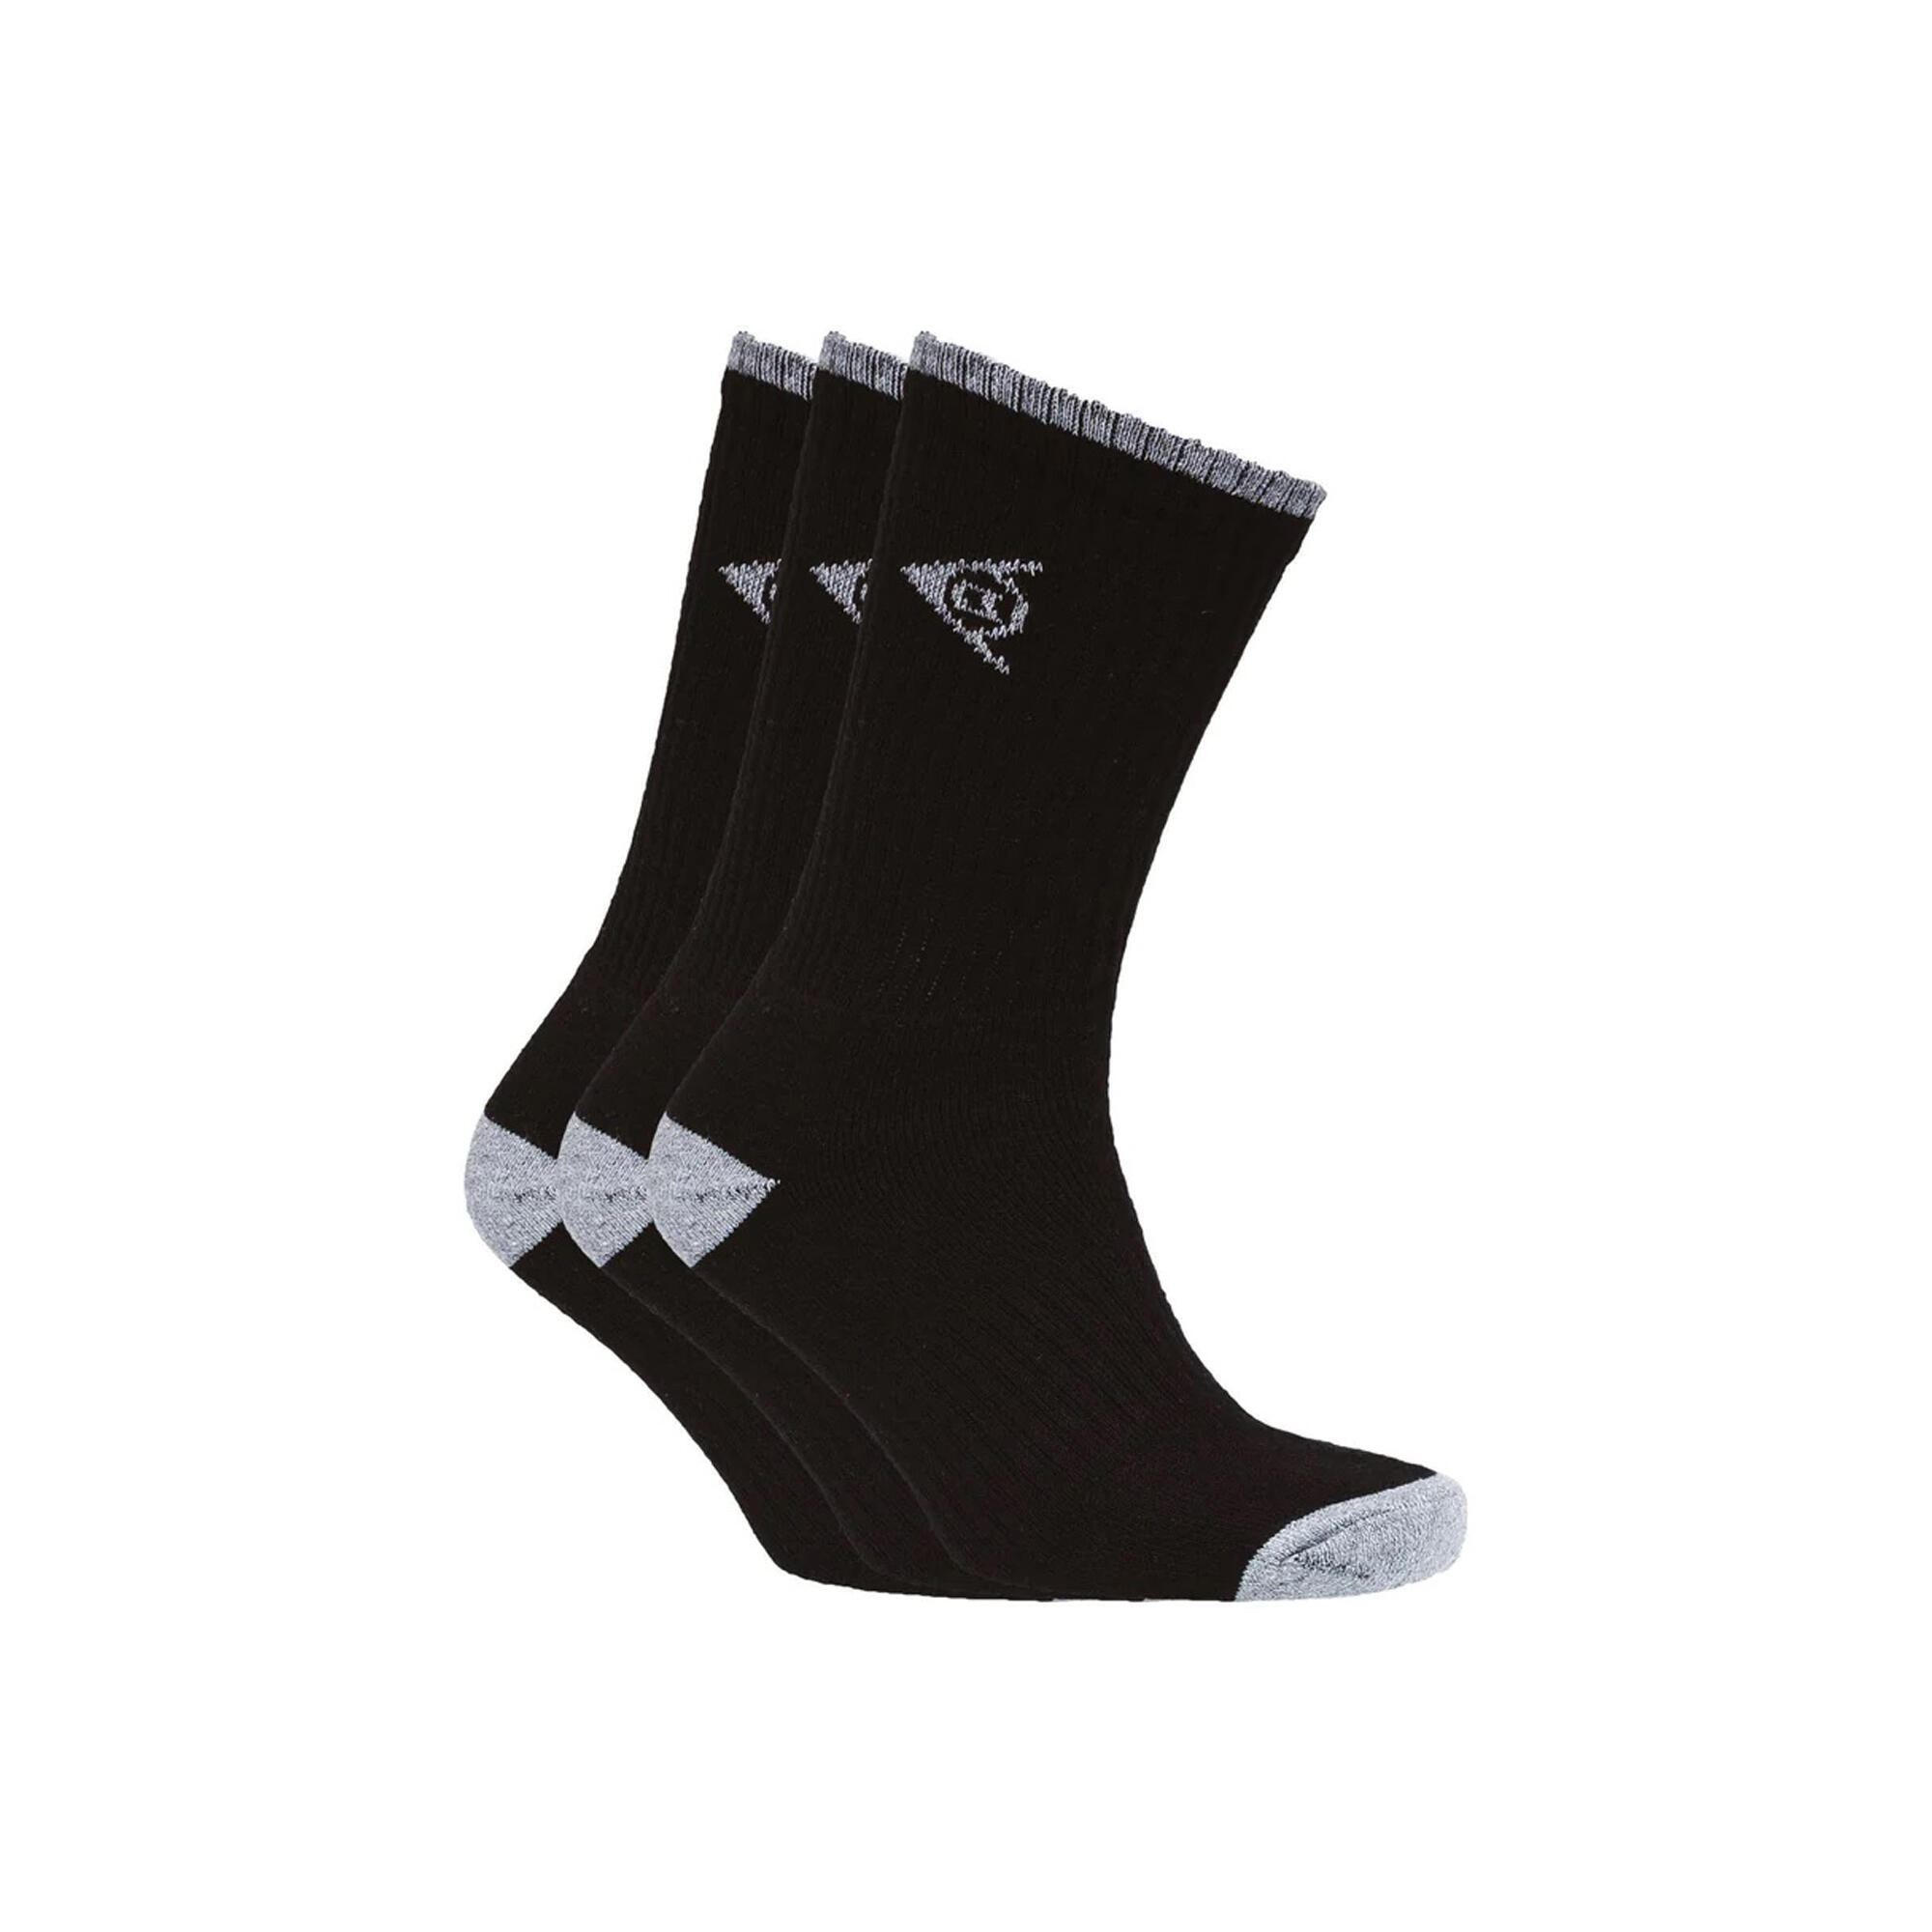 DUNLOP Mens Shawlong Sports Socks (Pack of 3) (Black)